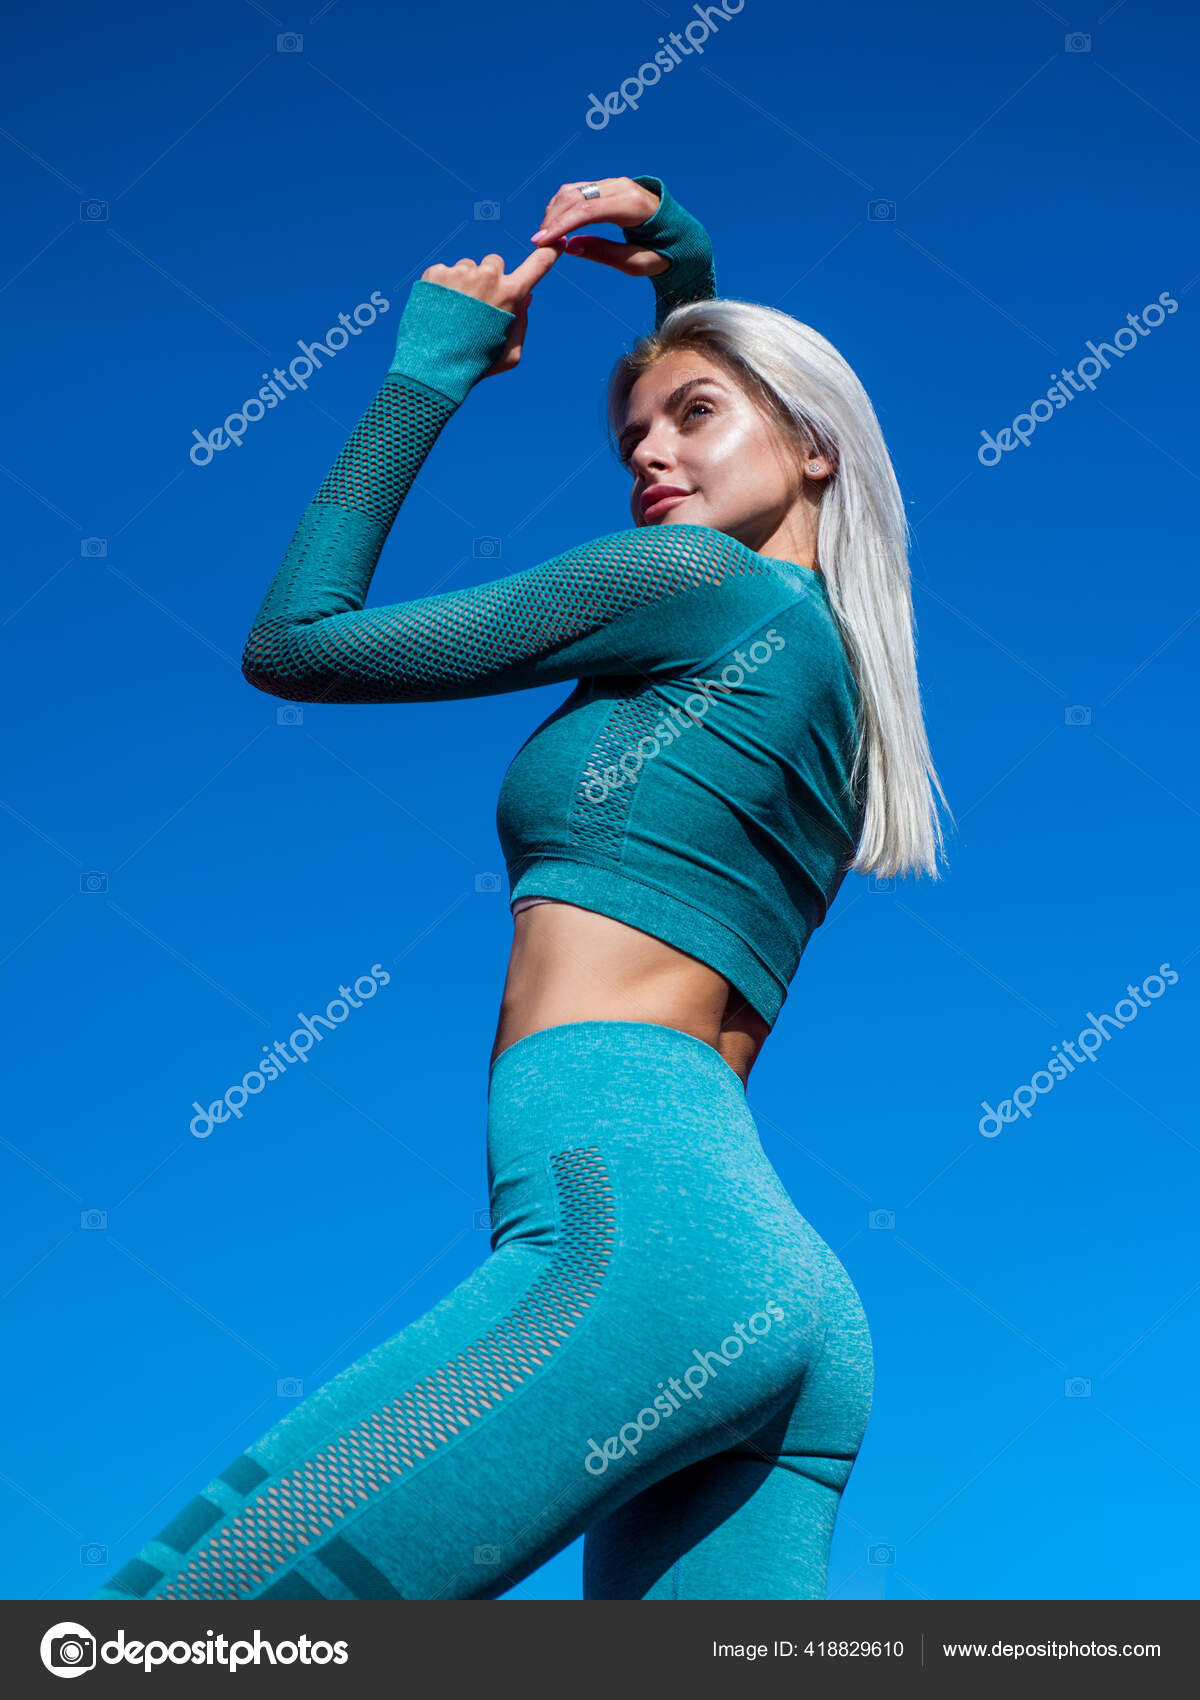 Lady has tight ass. sportive woman in sportswear. sexy woman on